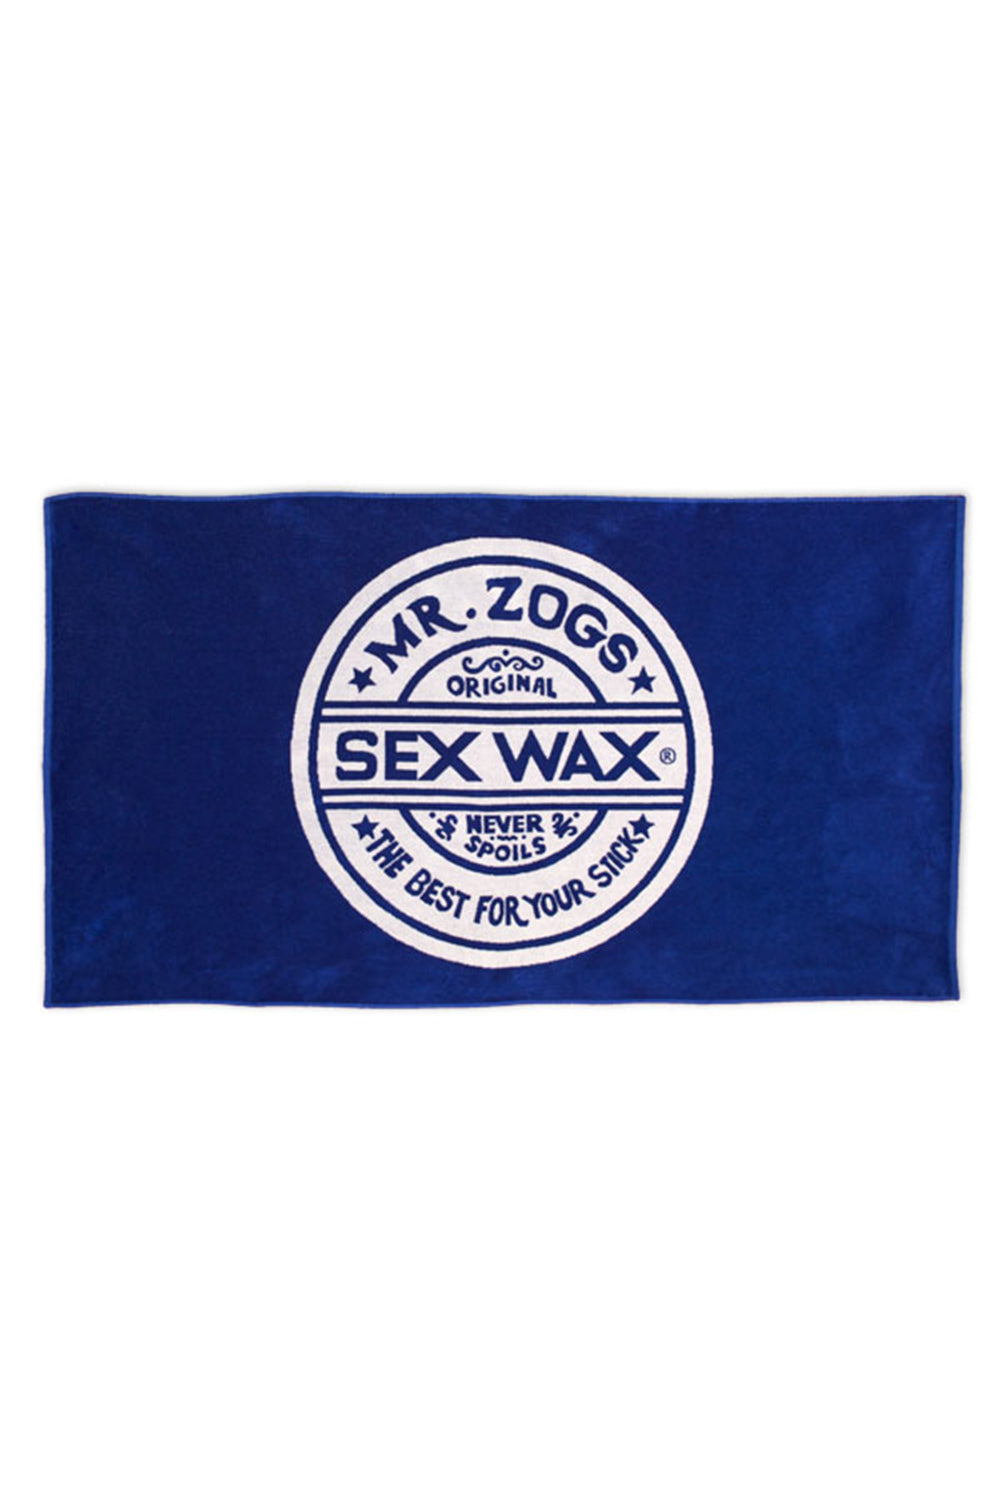 Sex Wax Towel - Blue